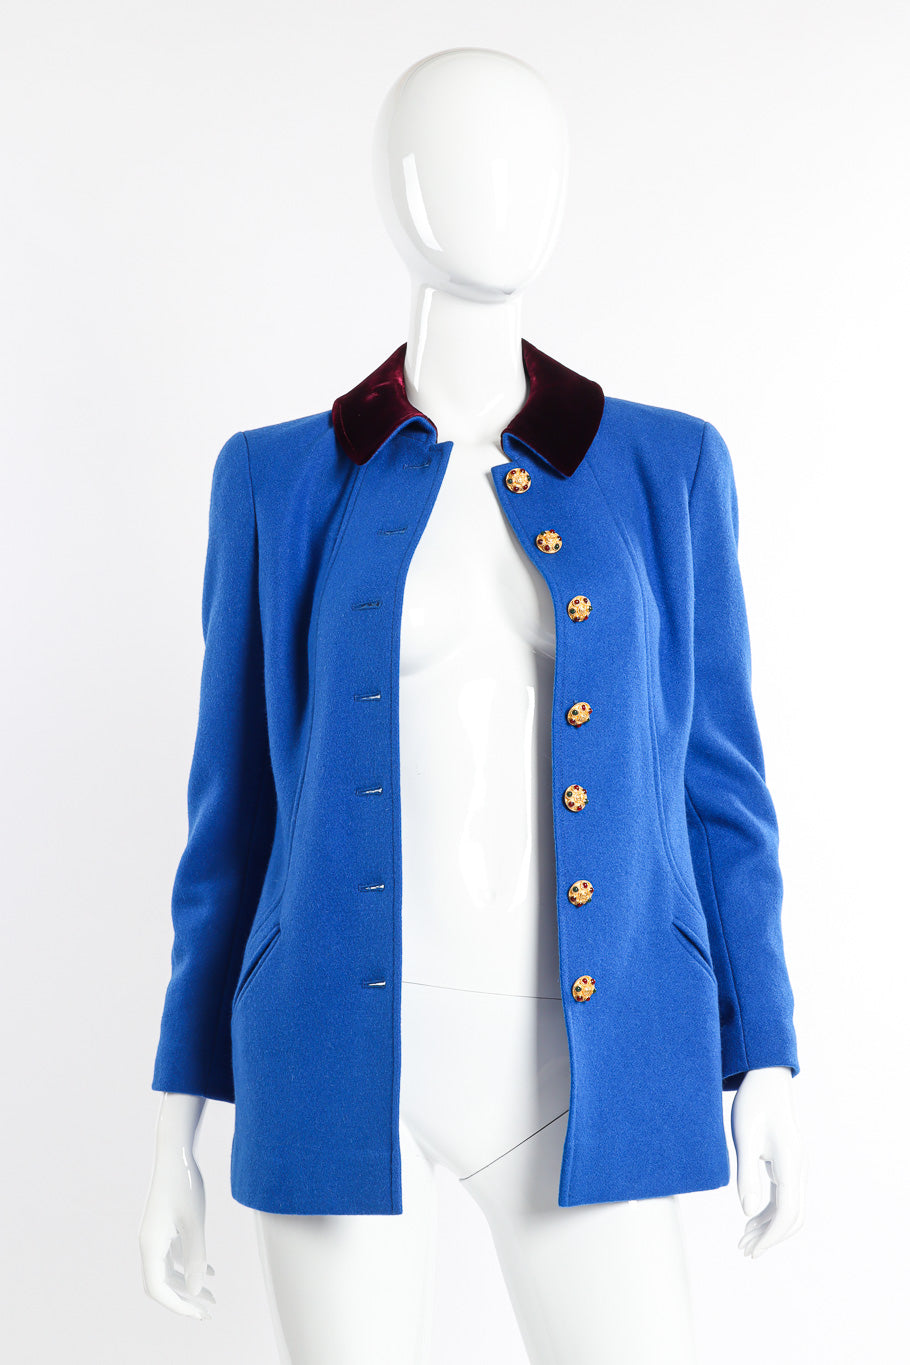 Velvet Collar Wool Jacket by Chanel on mannequin open @recessla